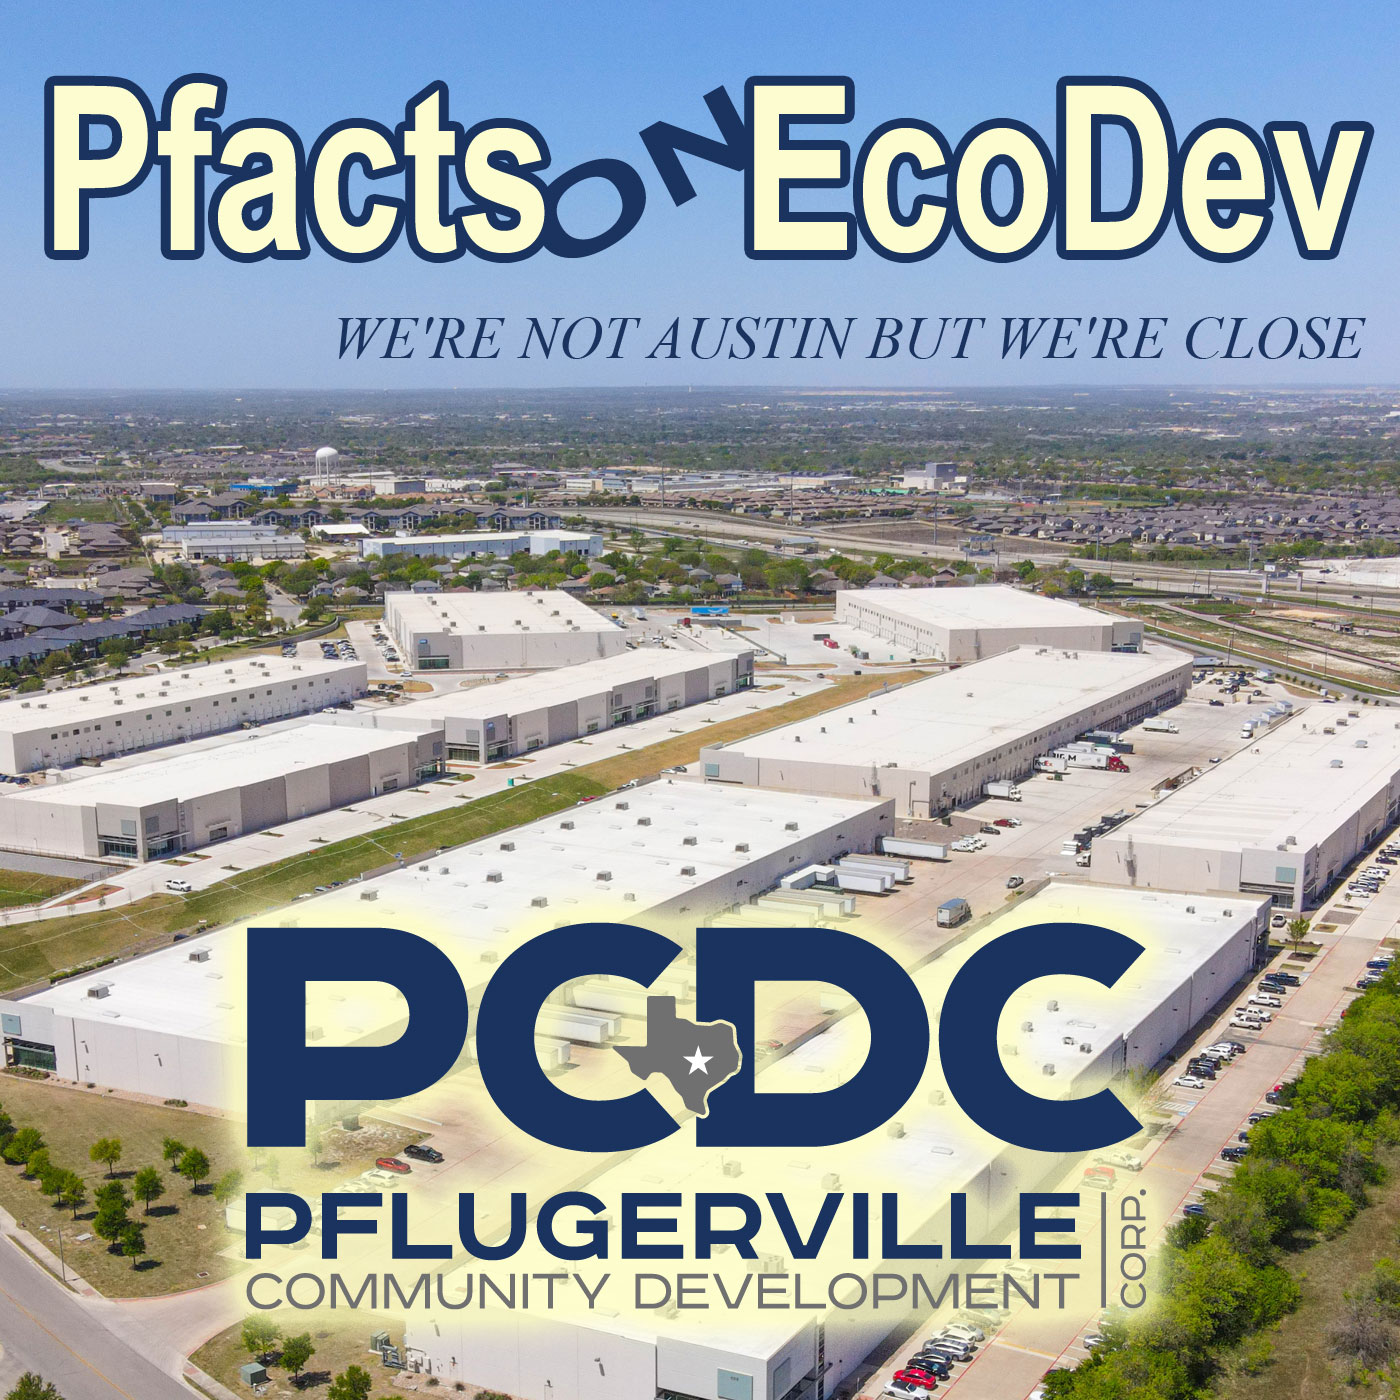 Pfacts on EcoDev